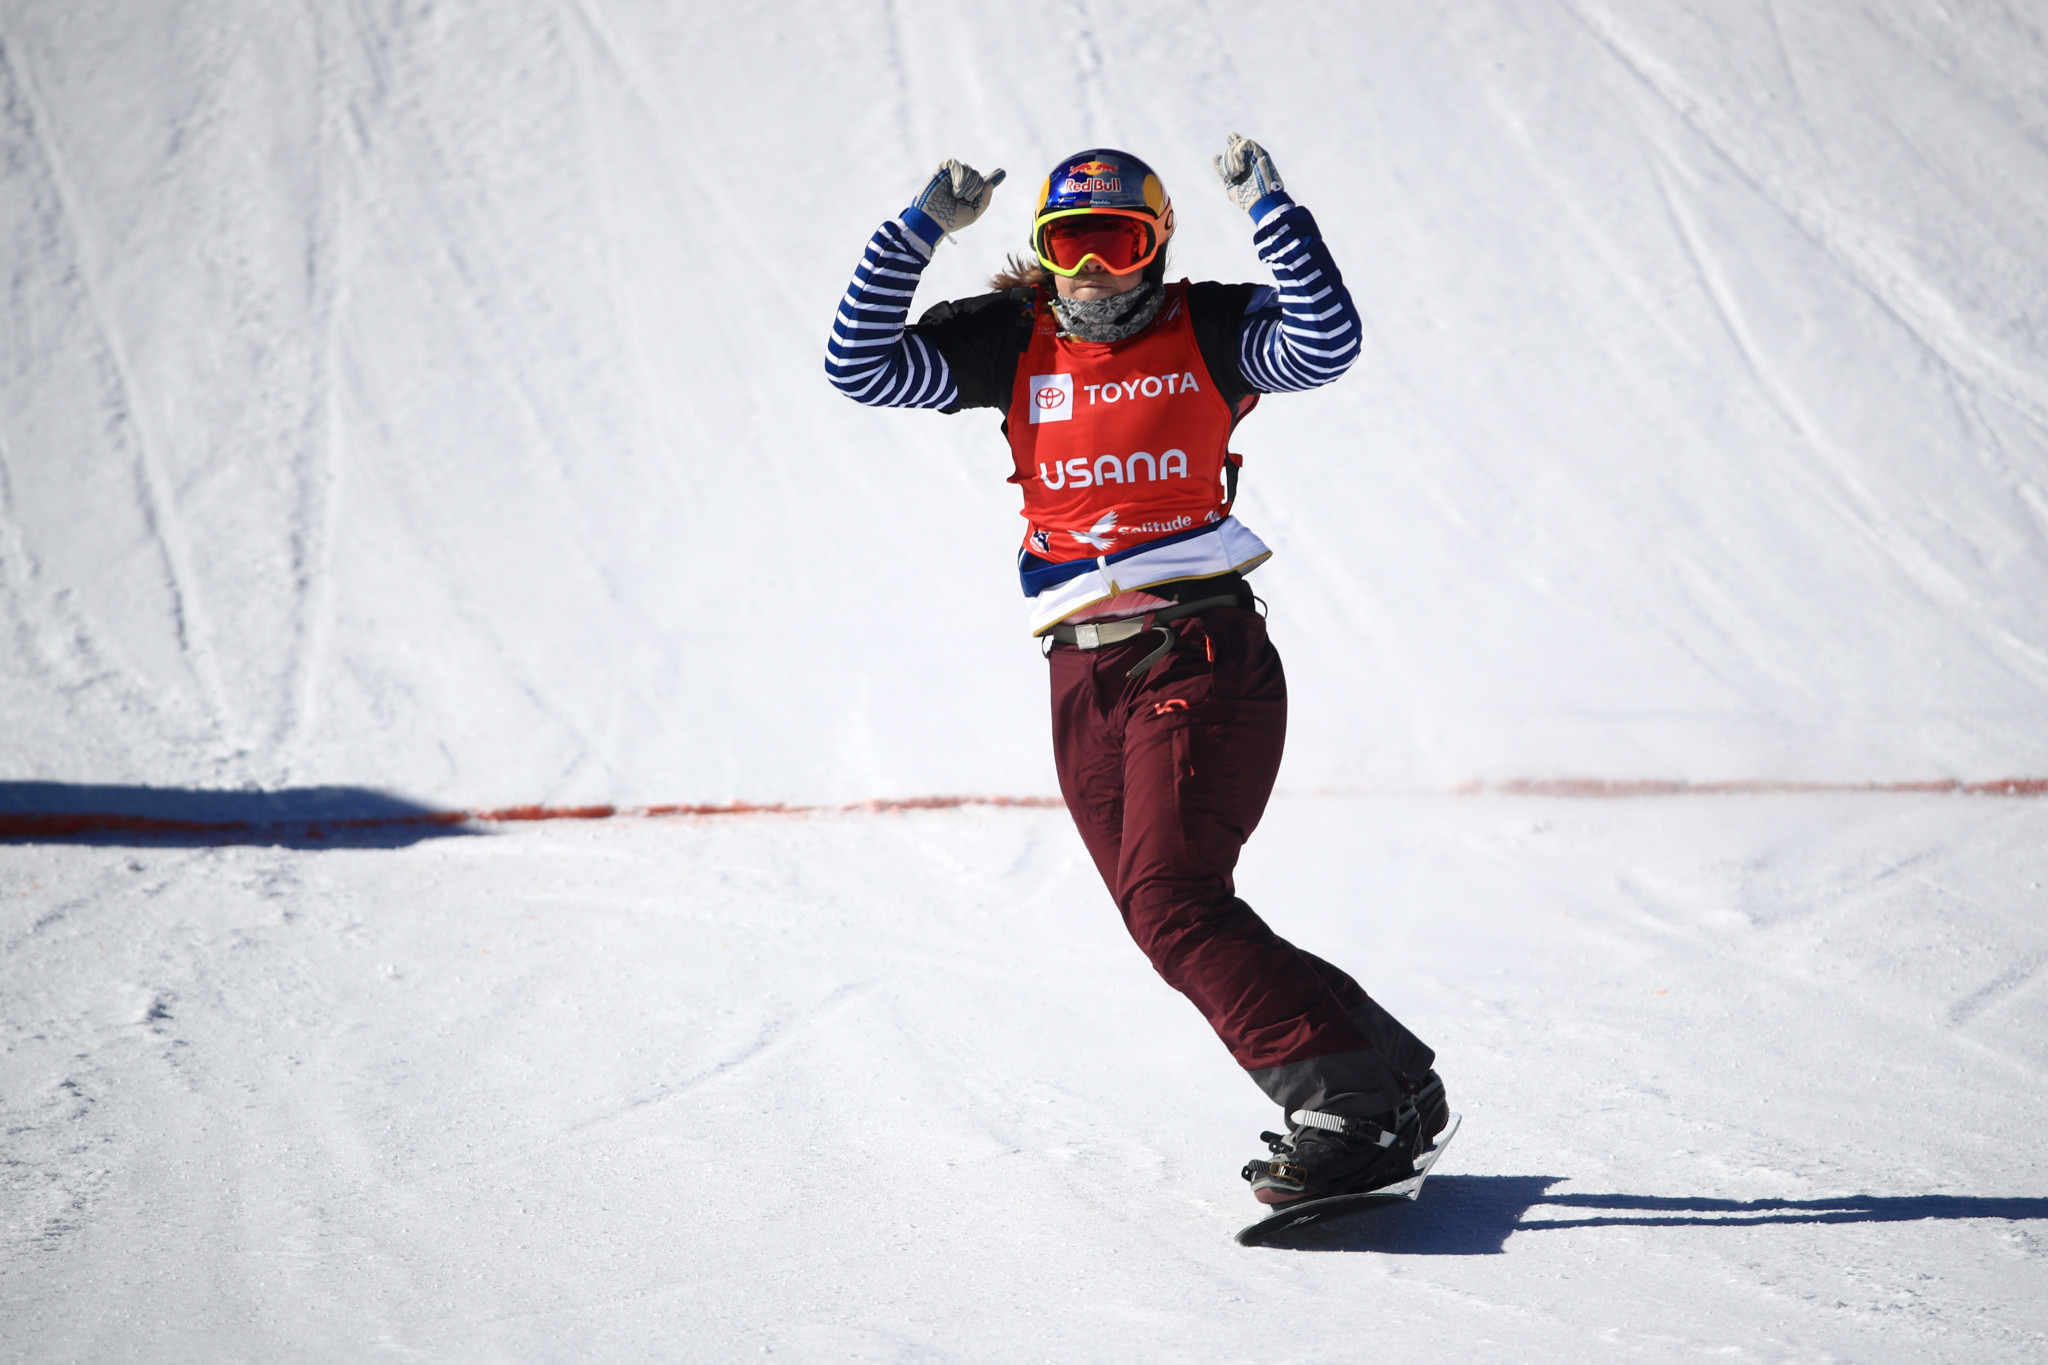 Samková beats Jacobellis to Snowboard Cross World Cup title with final victory in Veysonnaz